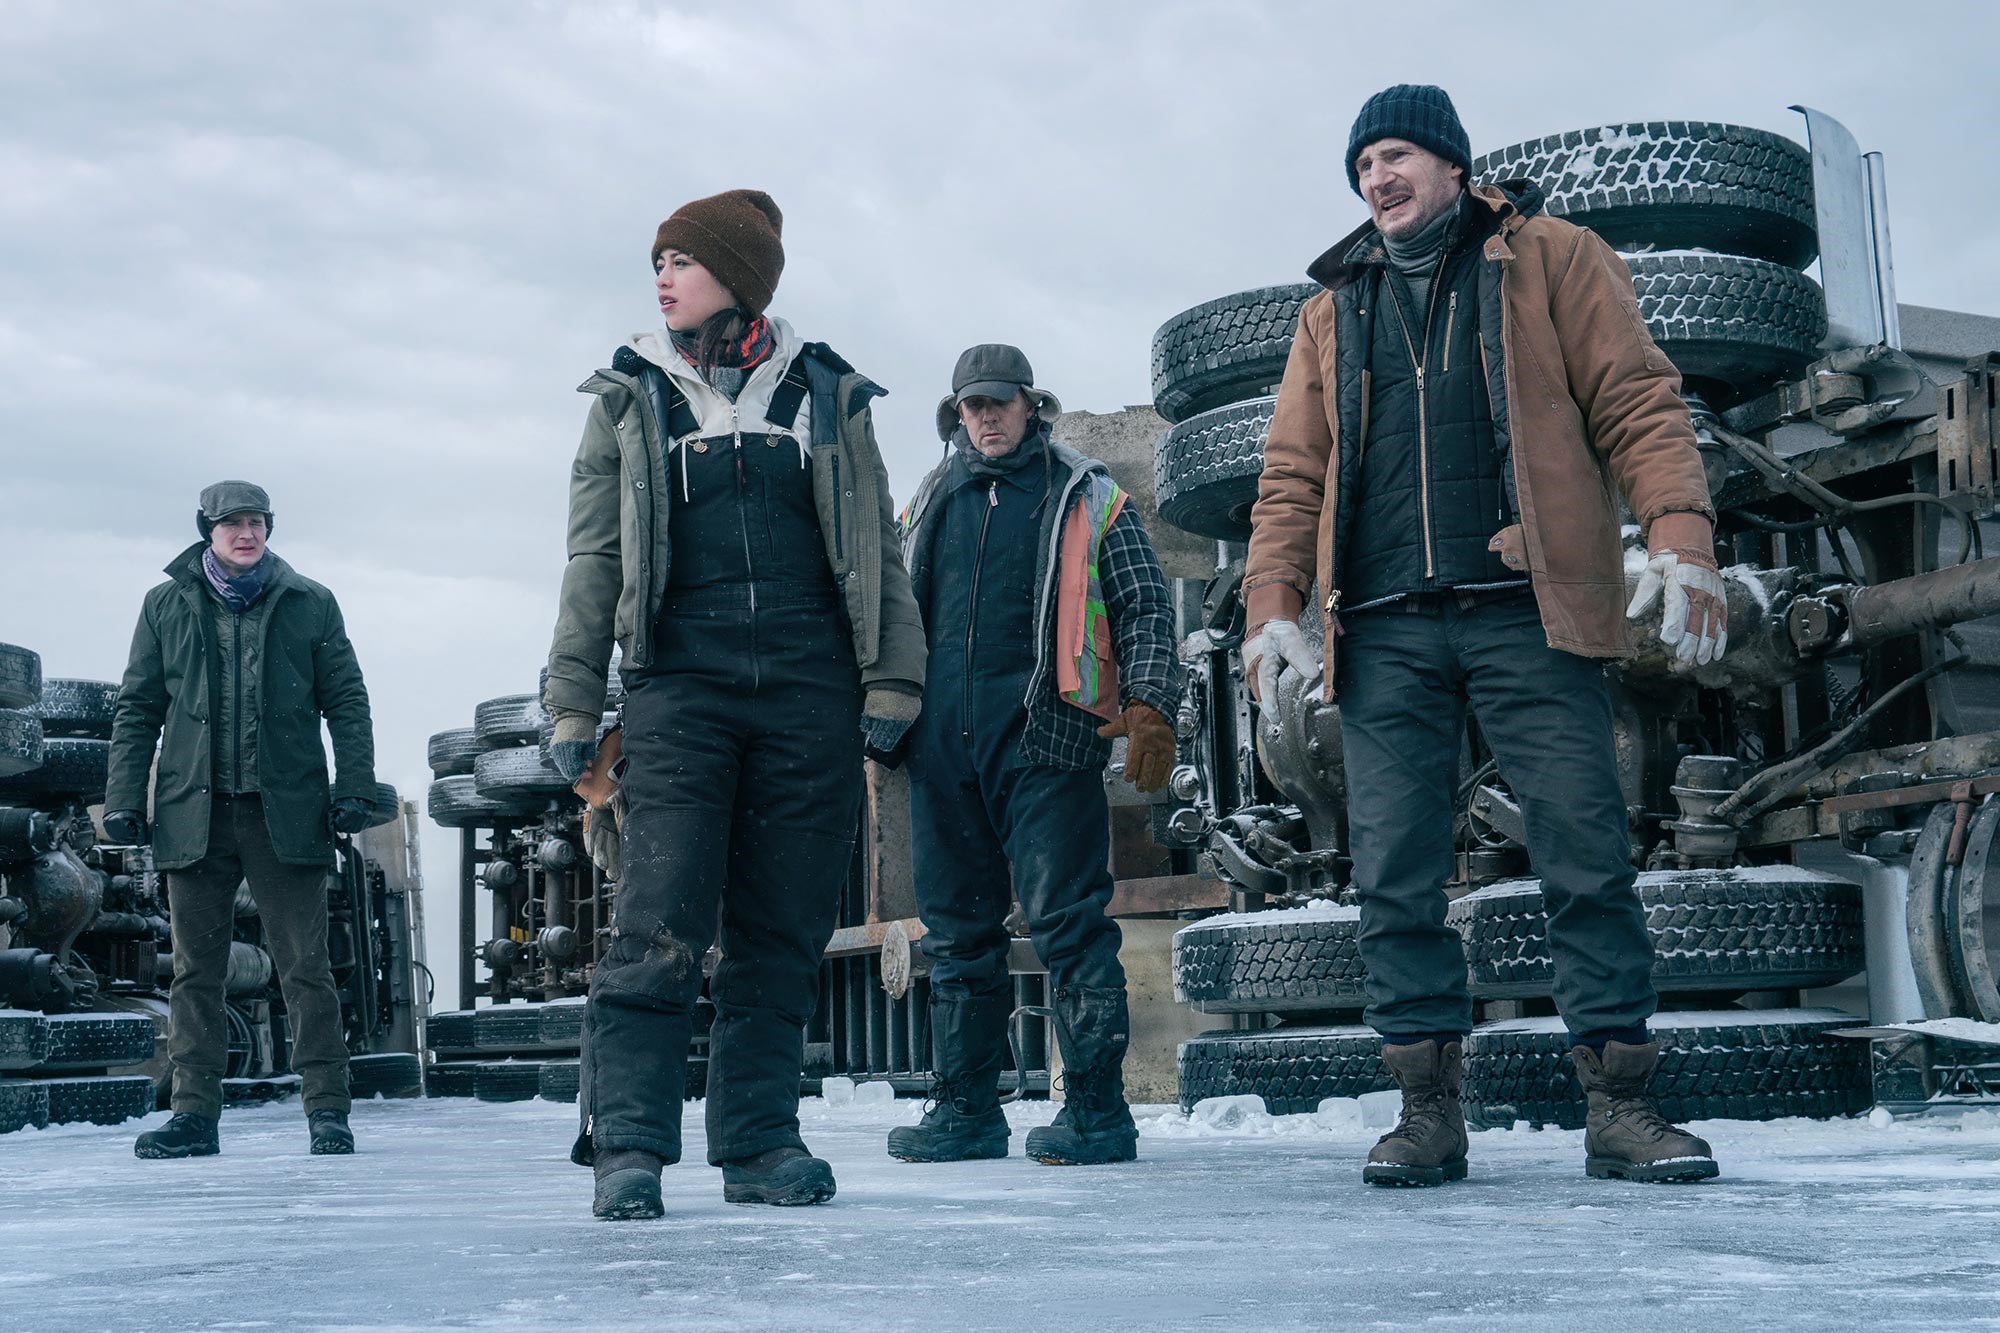 Netflix'in Liam Neeson başrollü filmi The Ice Road'un ilk fragmanı paylaşıldı